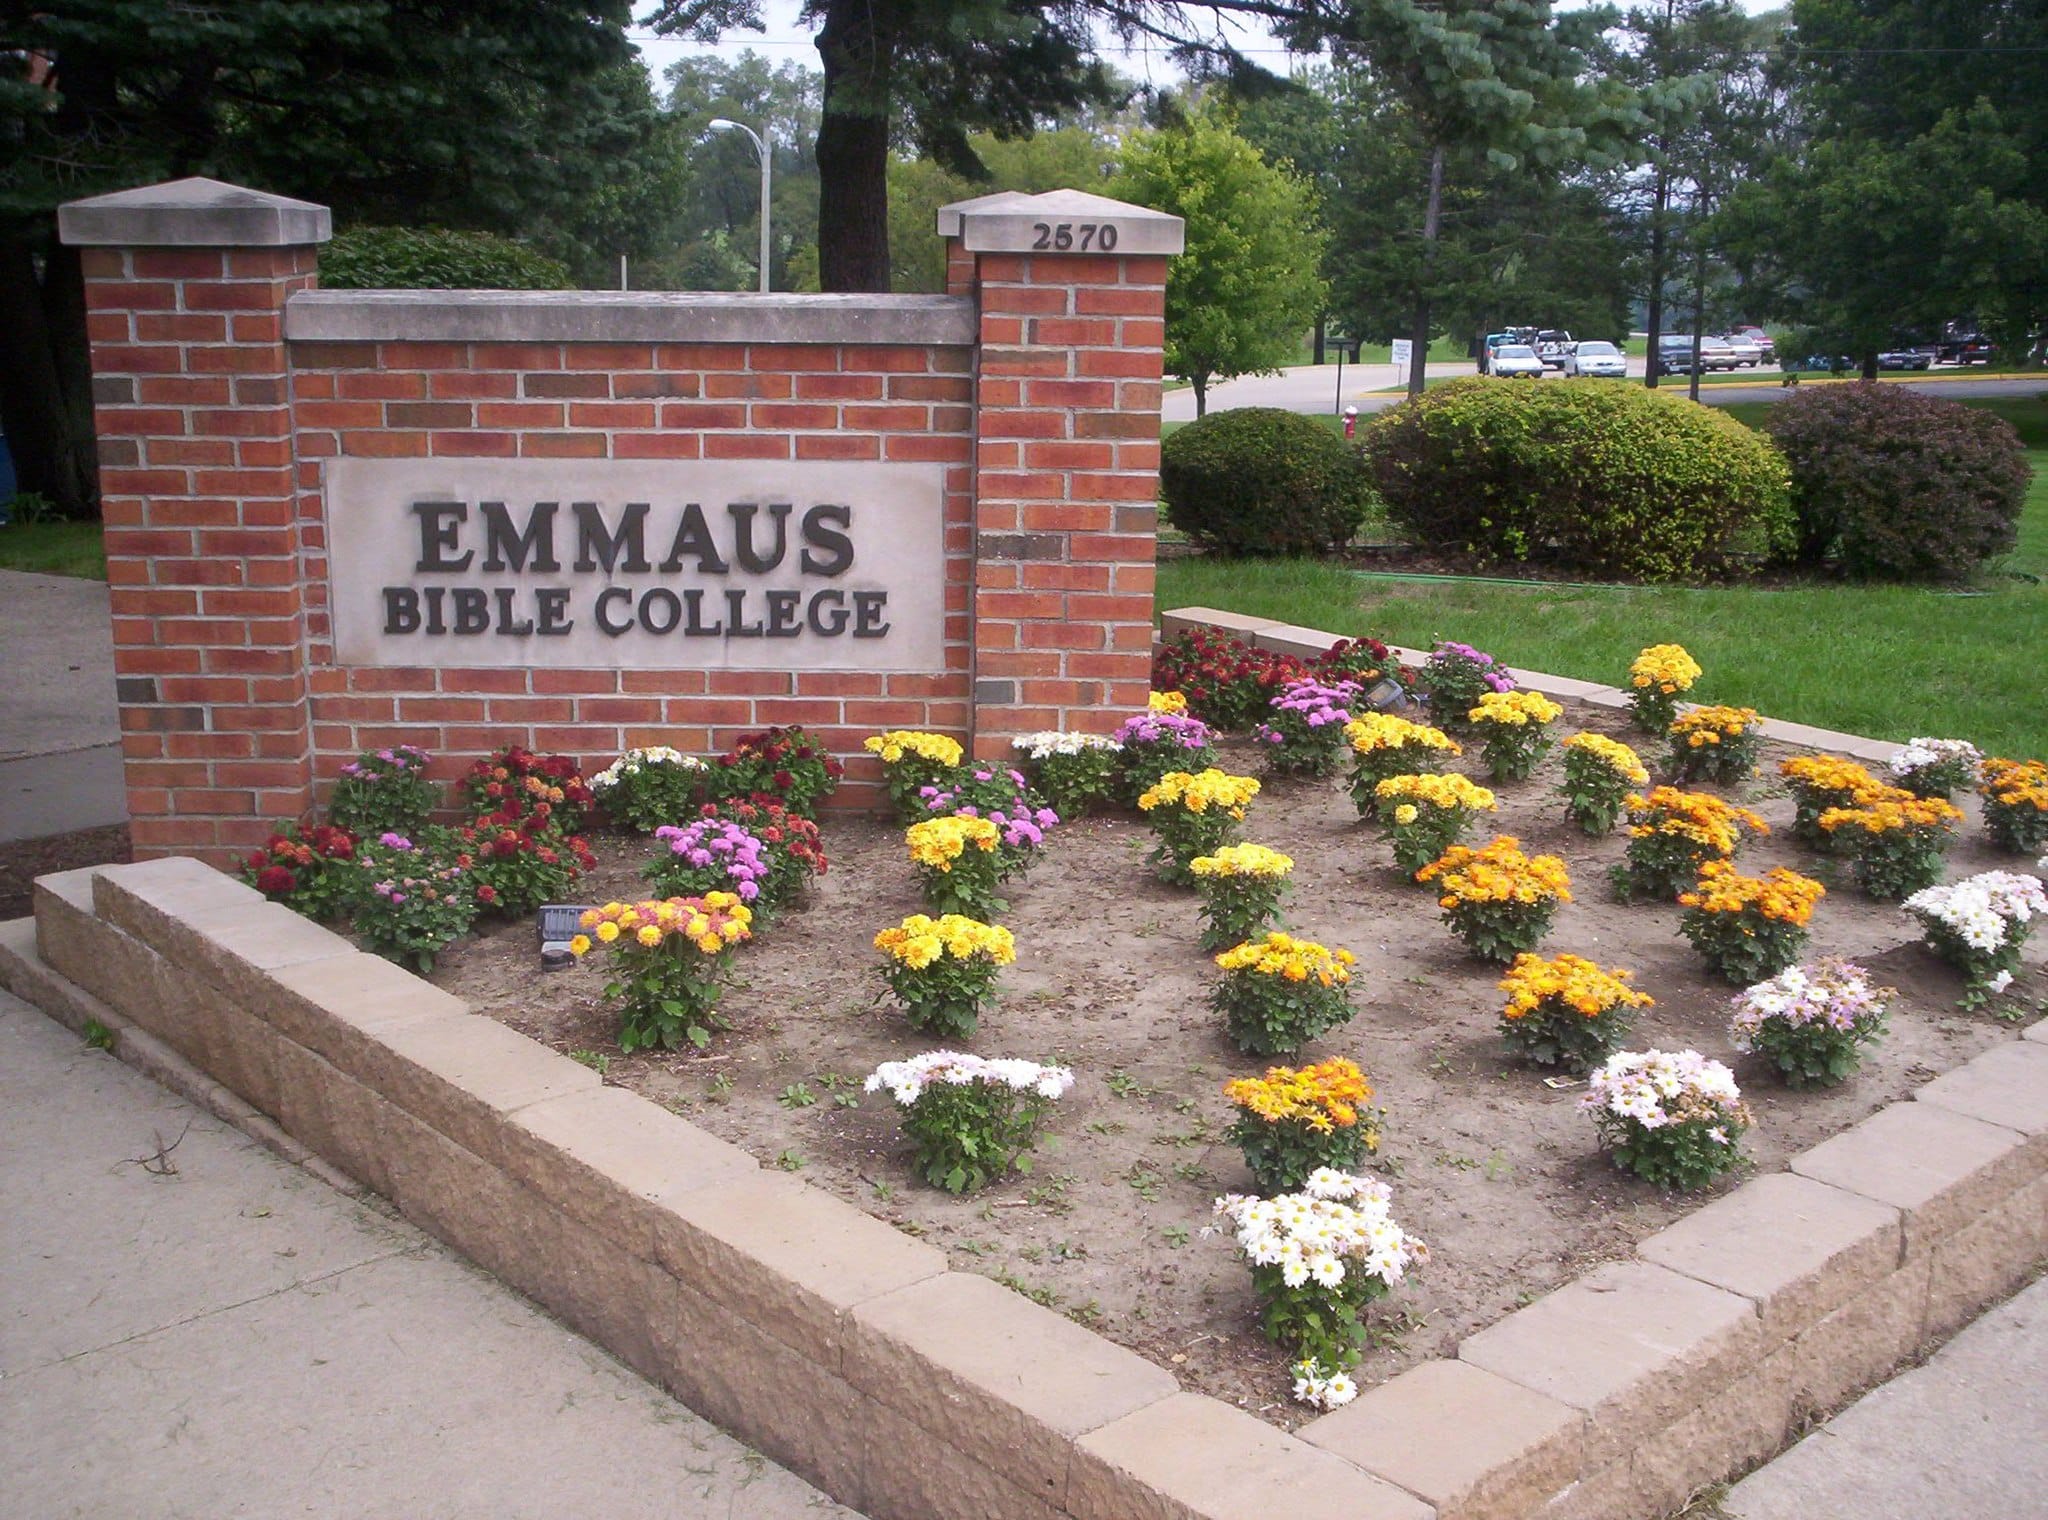 Emmaus Bible College sign